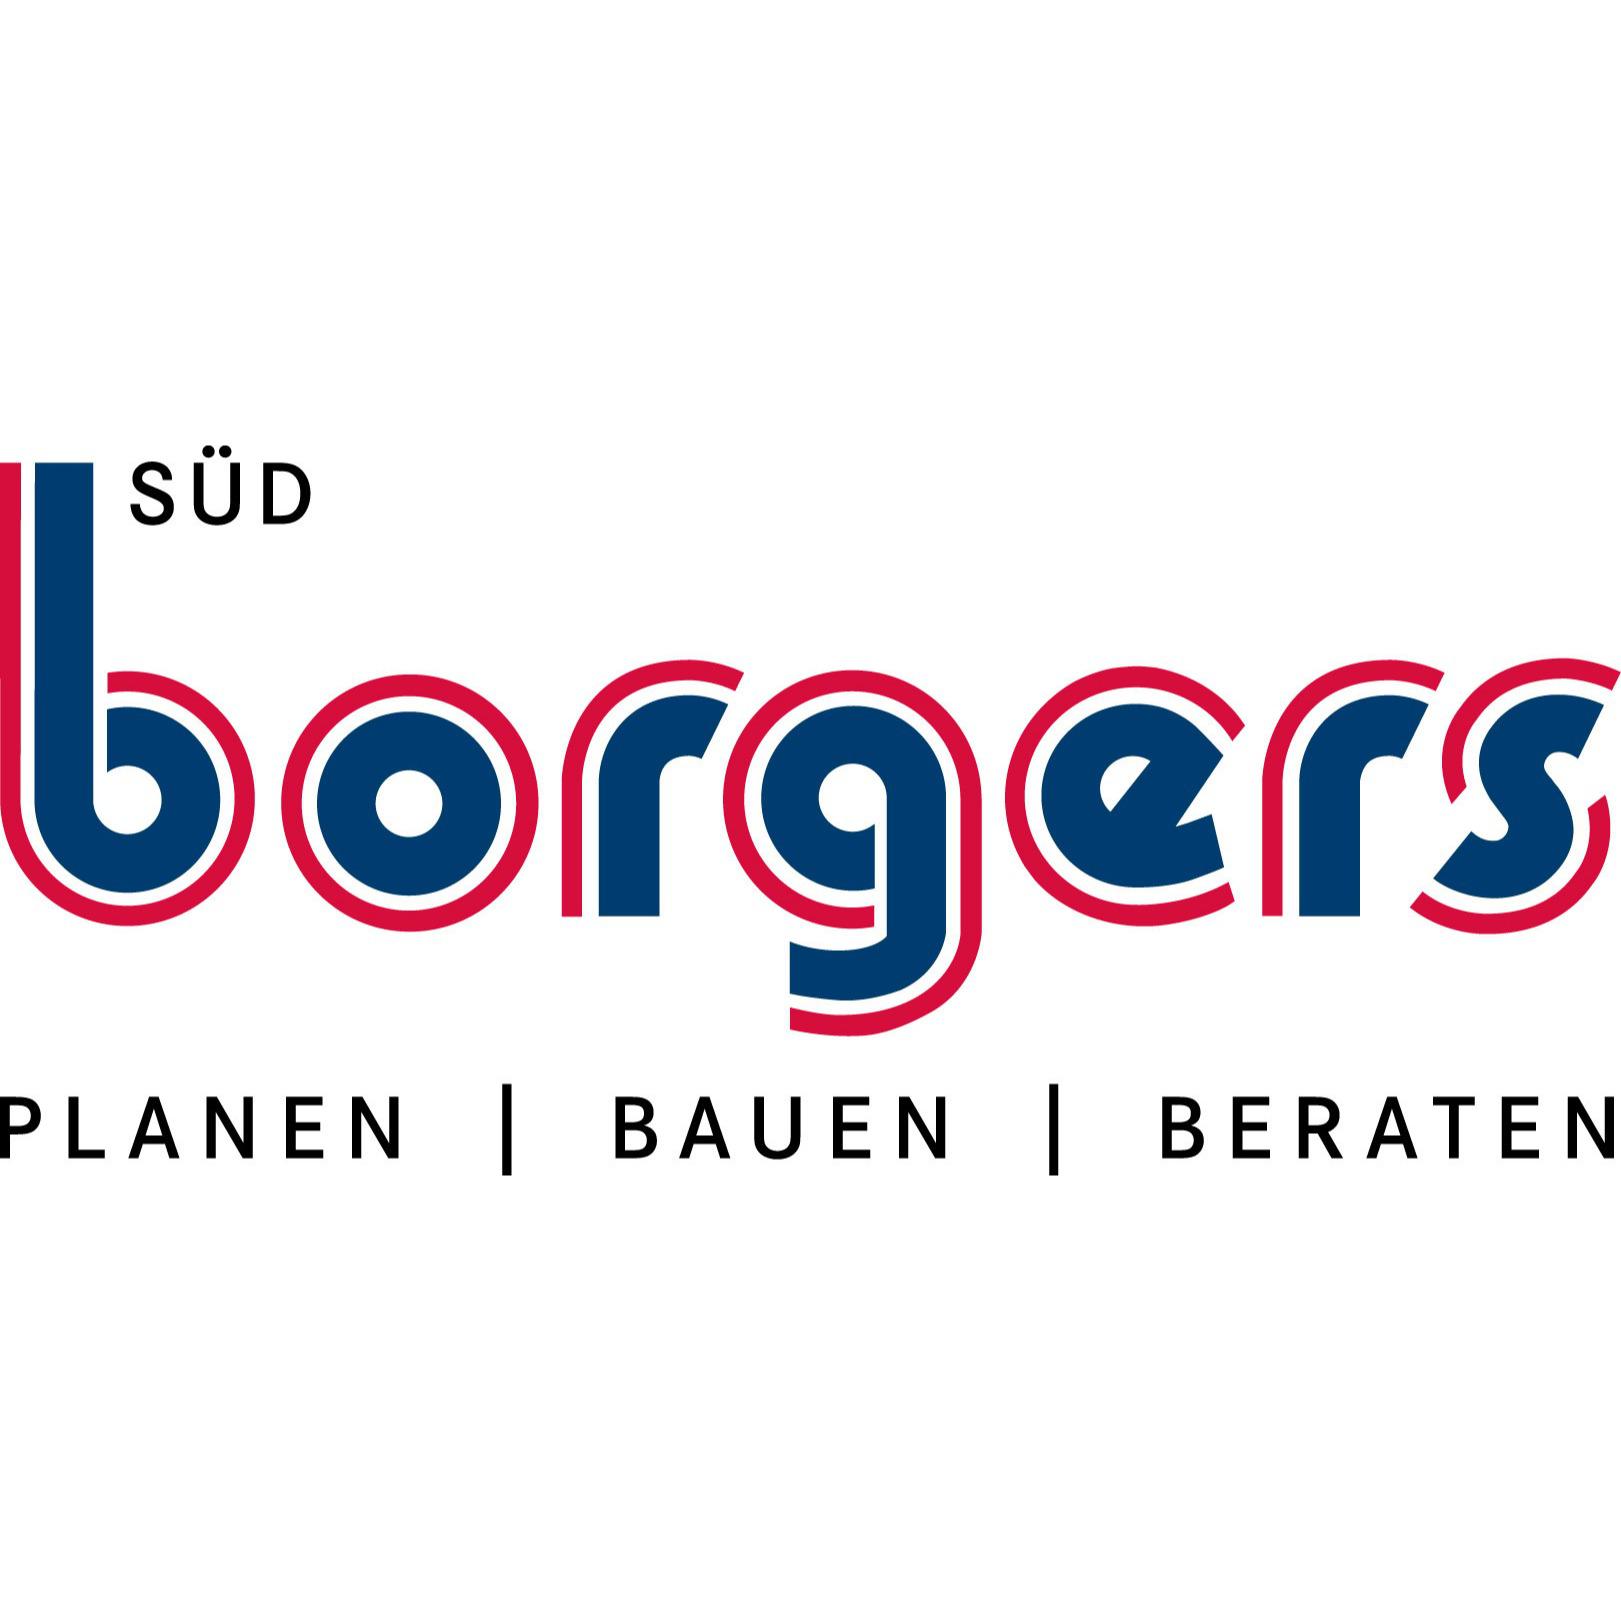 Logo Borgers Süd GmbH